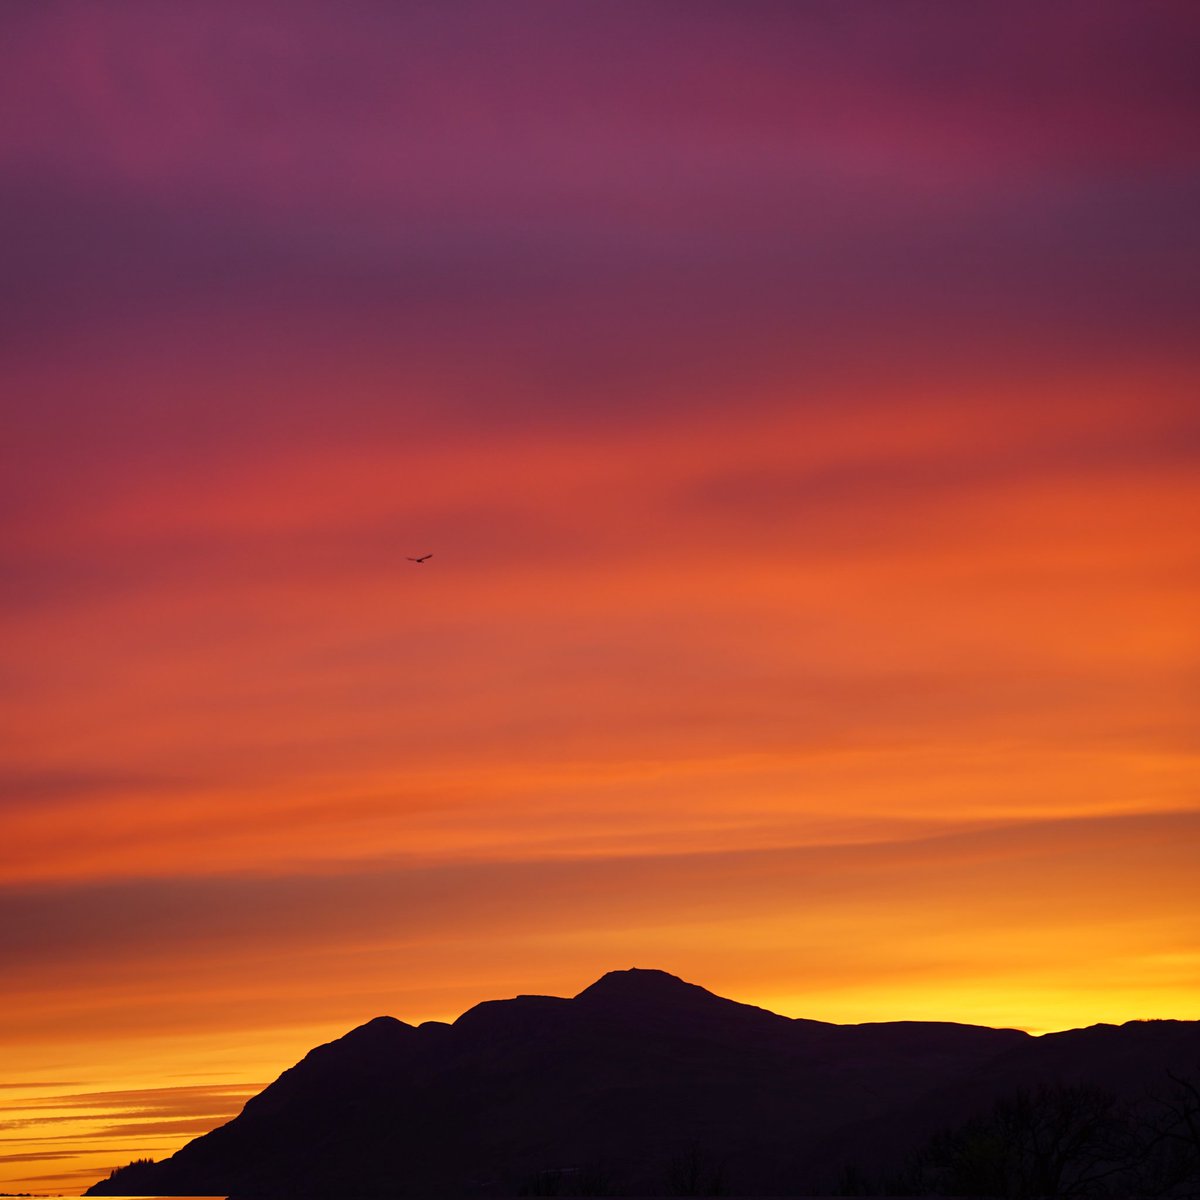 Simple sunset magic - have a wonderful new week, friends 
#ScotlandisNow #StormHour #photography #photooftheday #landscape #OutAndAboutScotland #landscapephotography 
@VisitScotland @ScotsMagazine #friends #ThePhotoHour #stvsnaps #beautiful #sunset